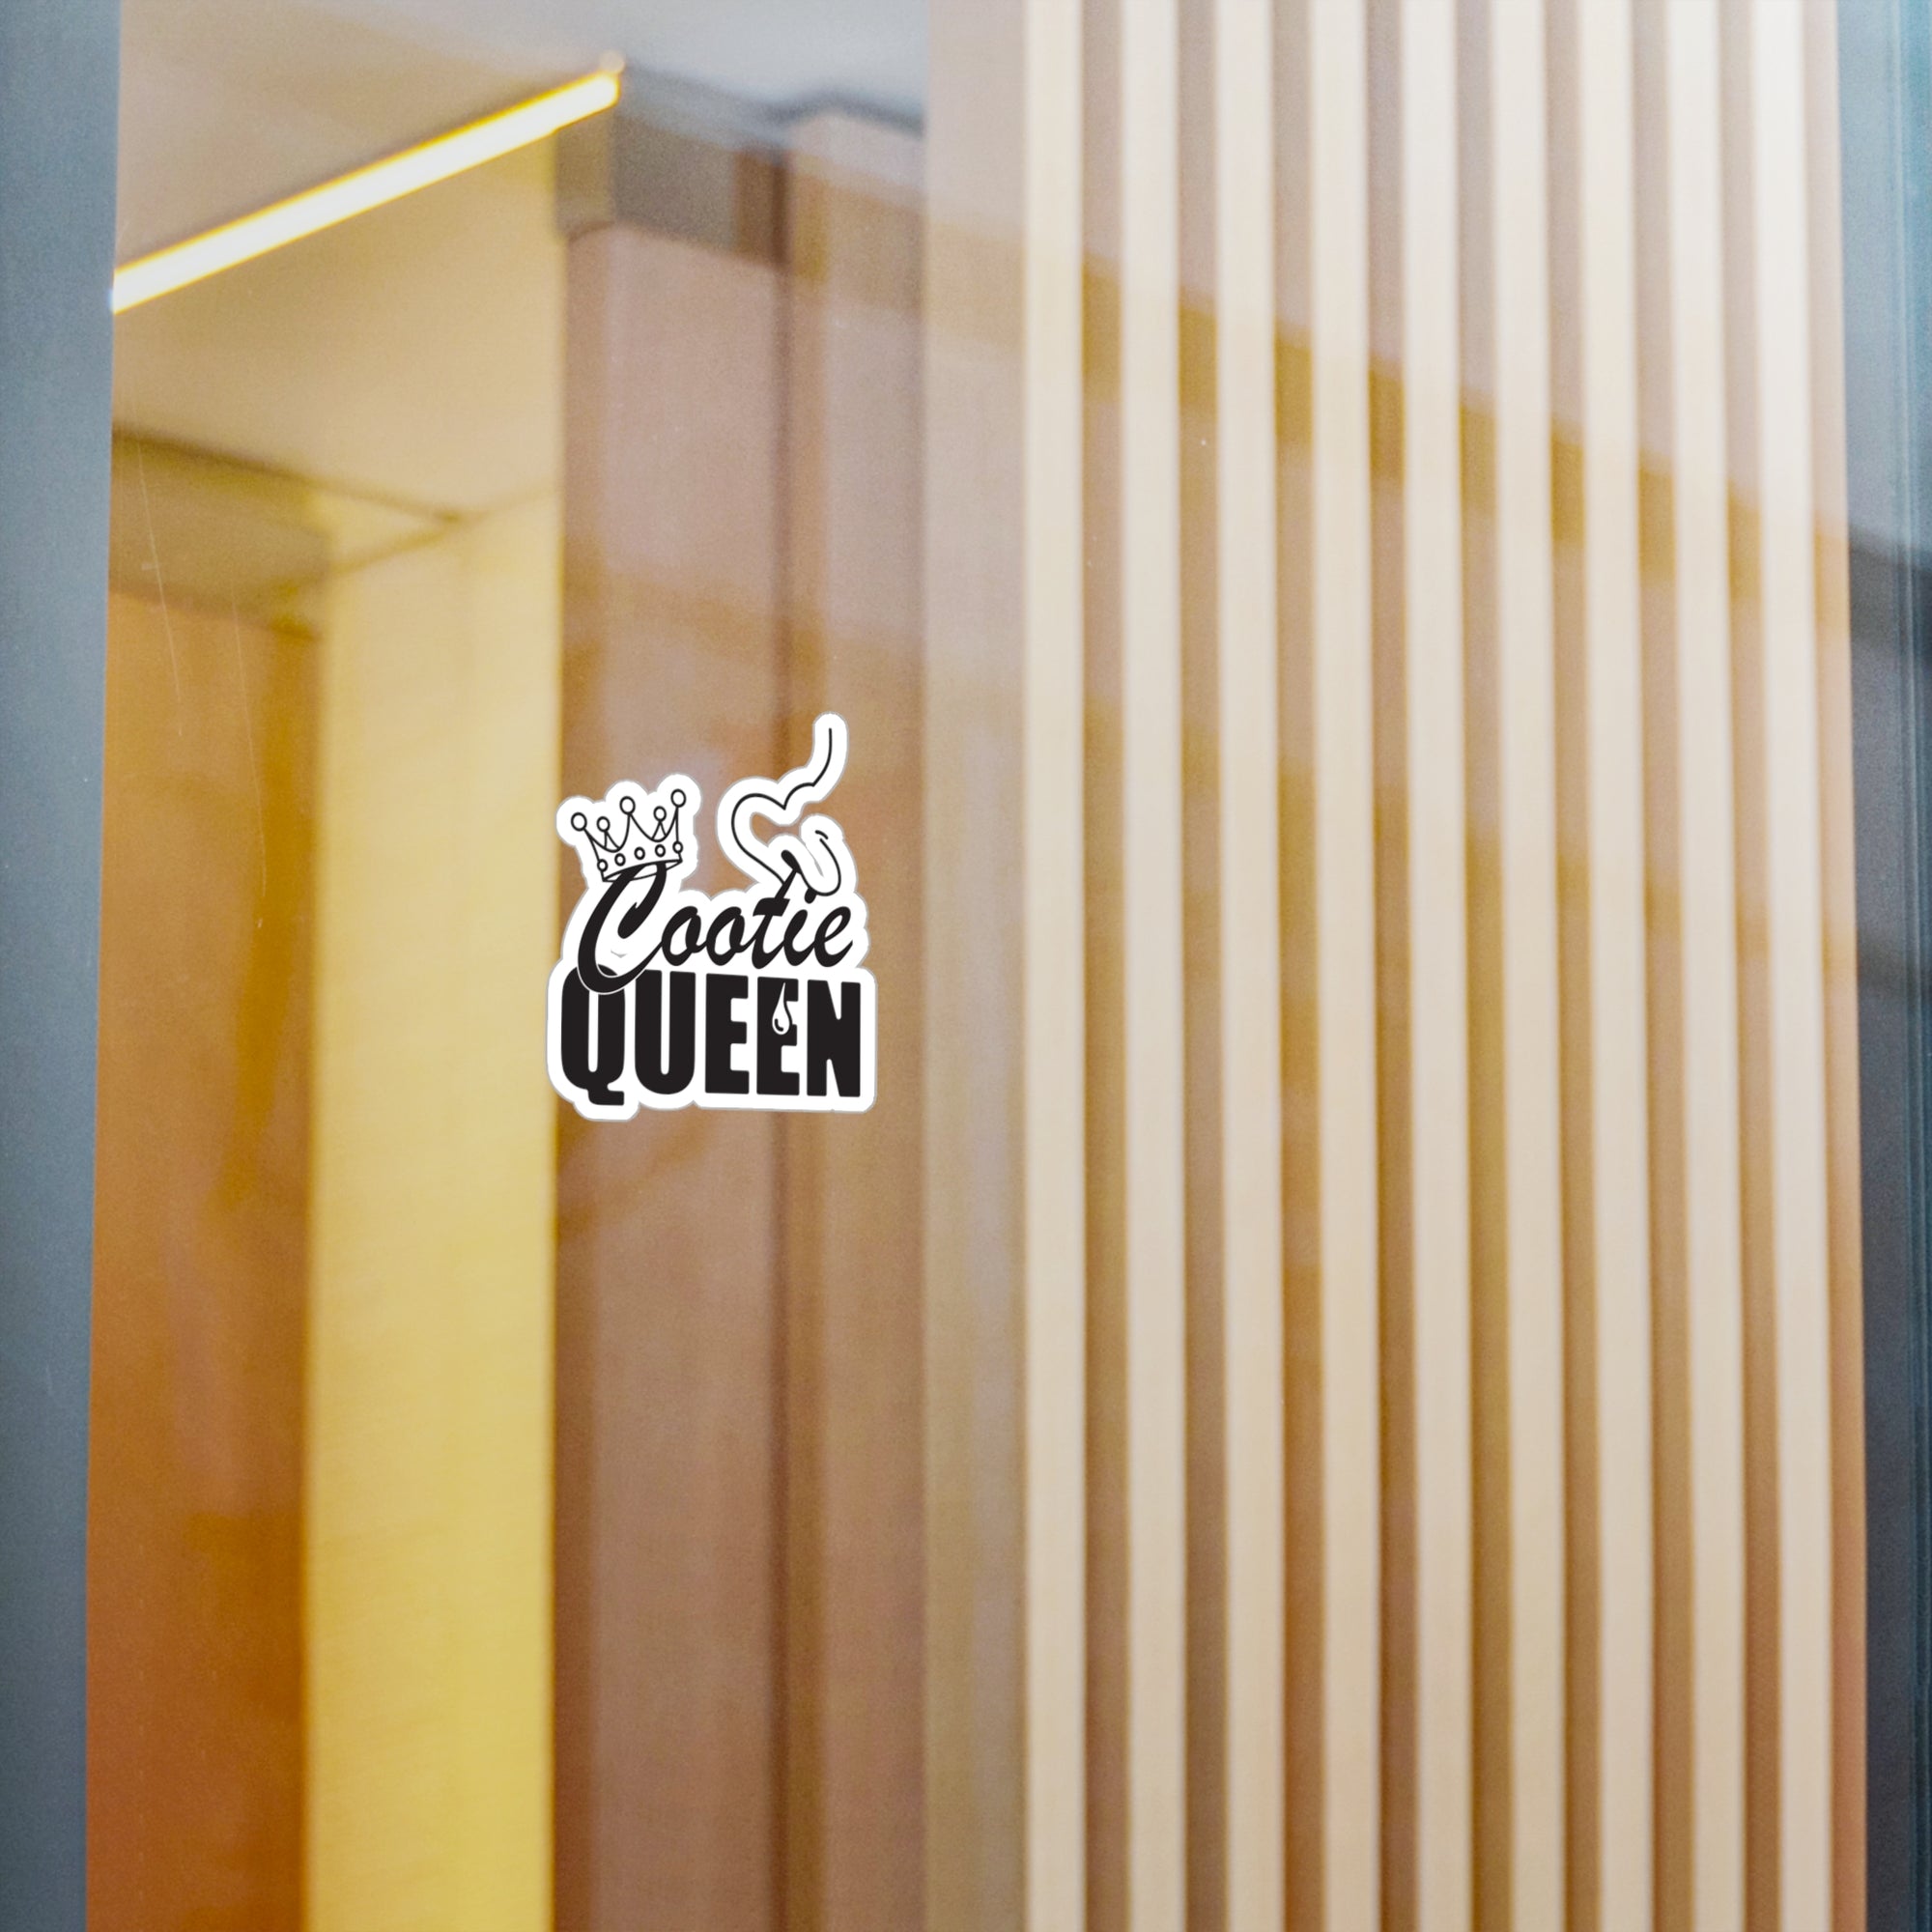 Cootie Queen Sticker